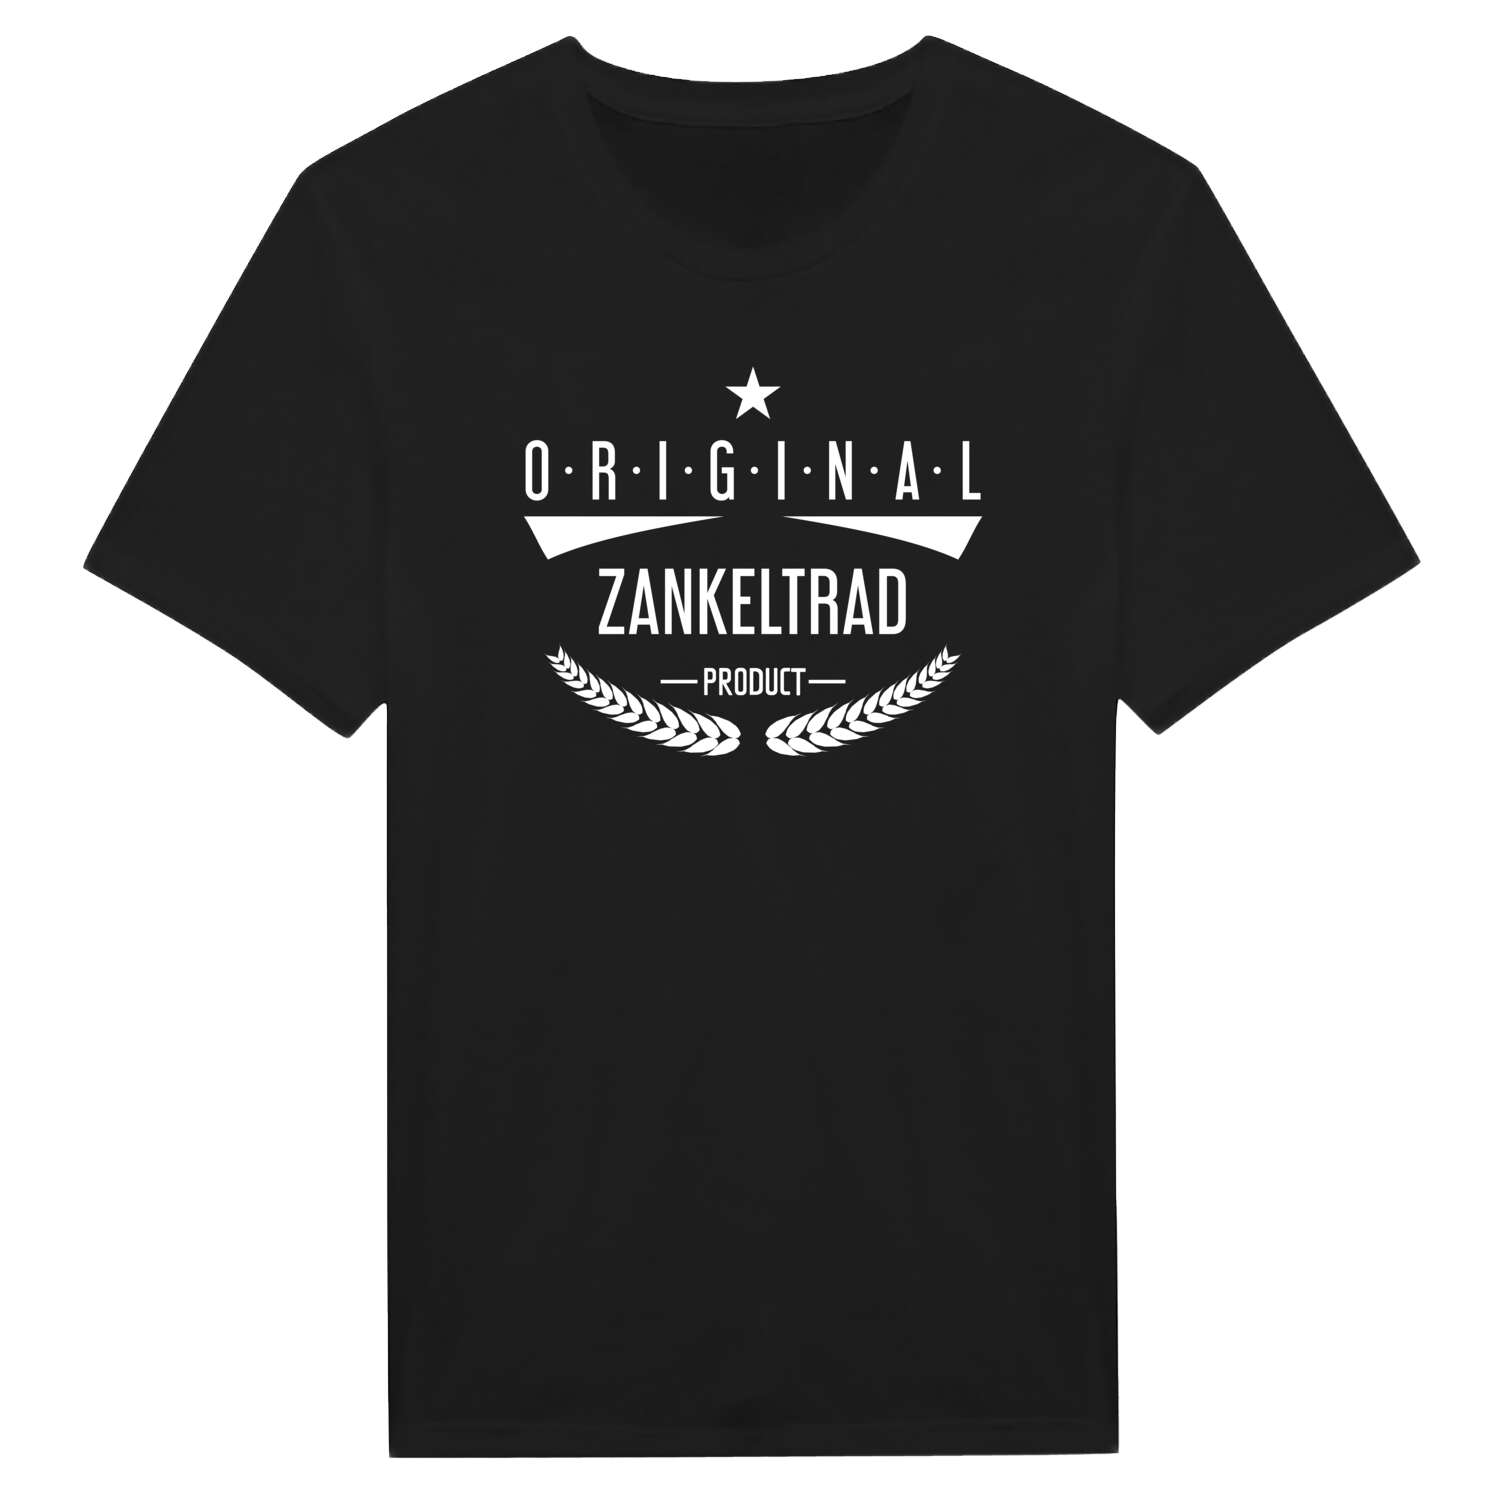 Zankeltrad T-Shirt »Original Product«